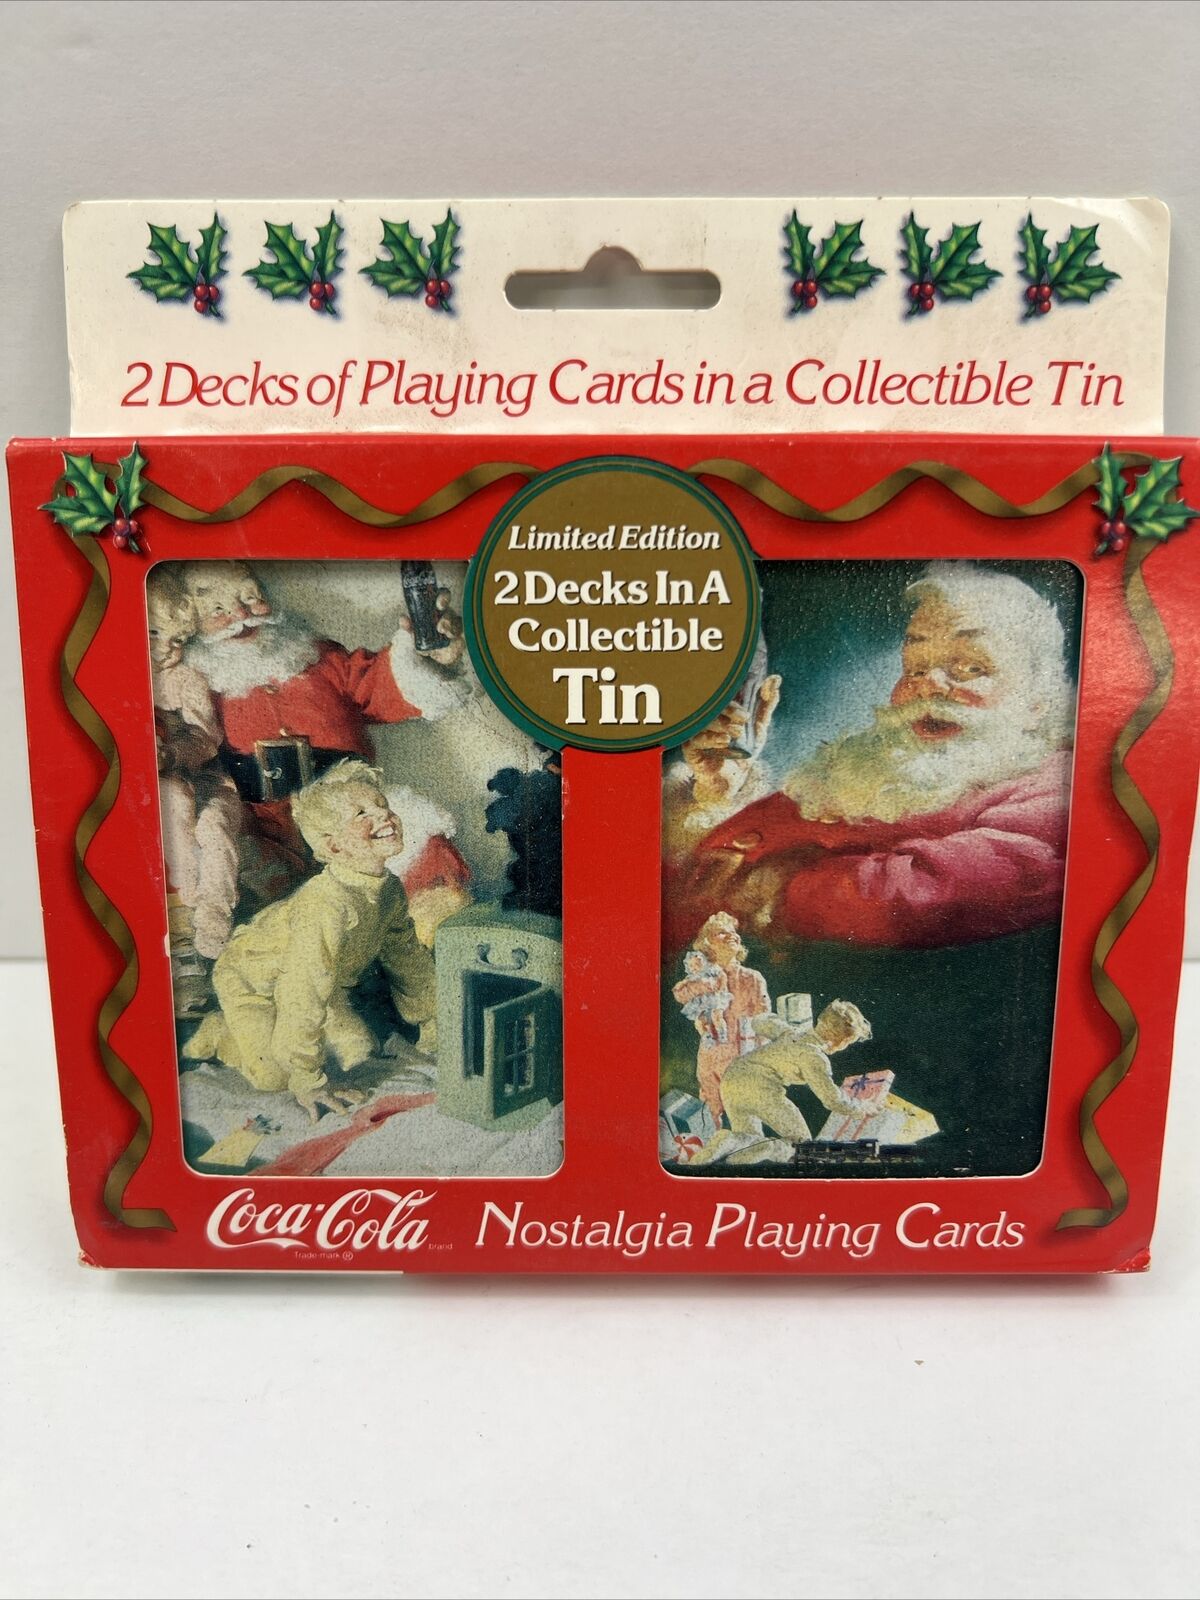 1996 Coca-Cola Nostalgia Playing Cards 2 Decks Collectable Tin Limited Edition 